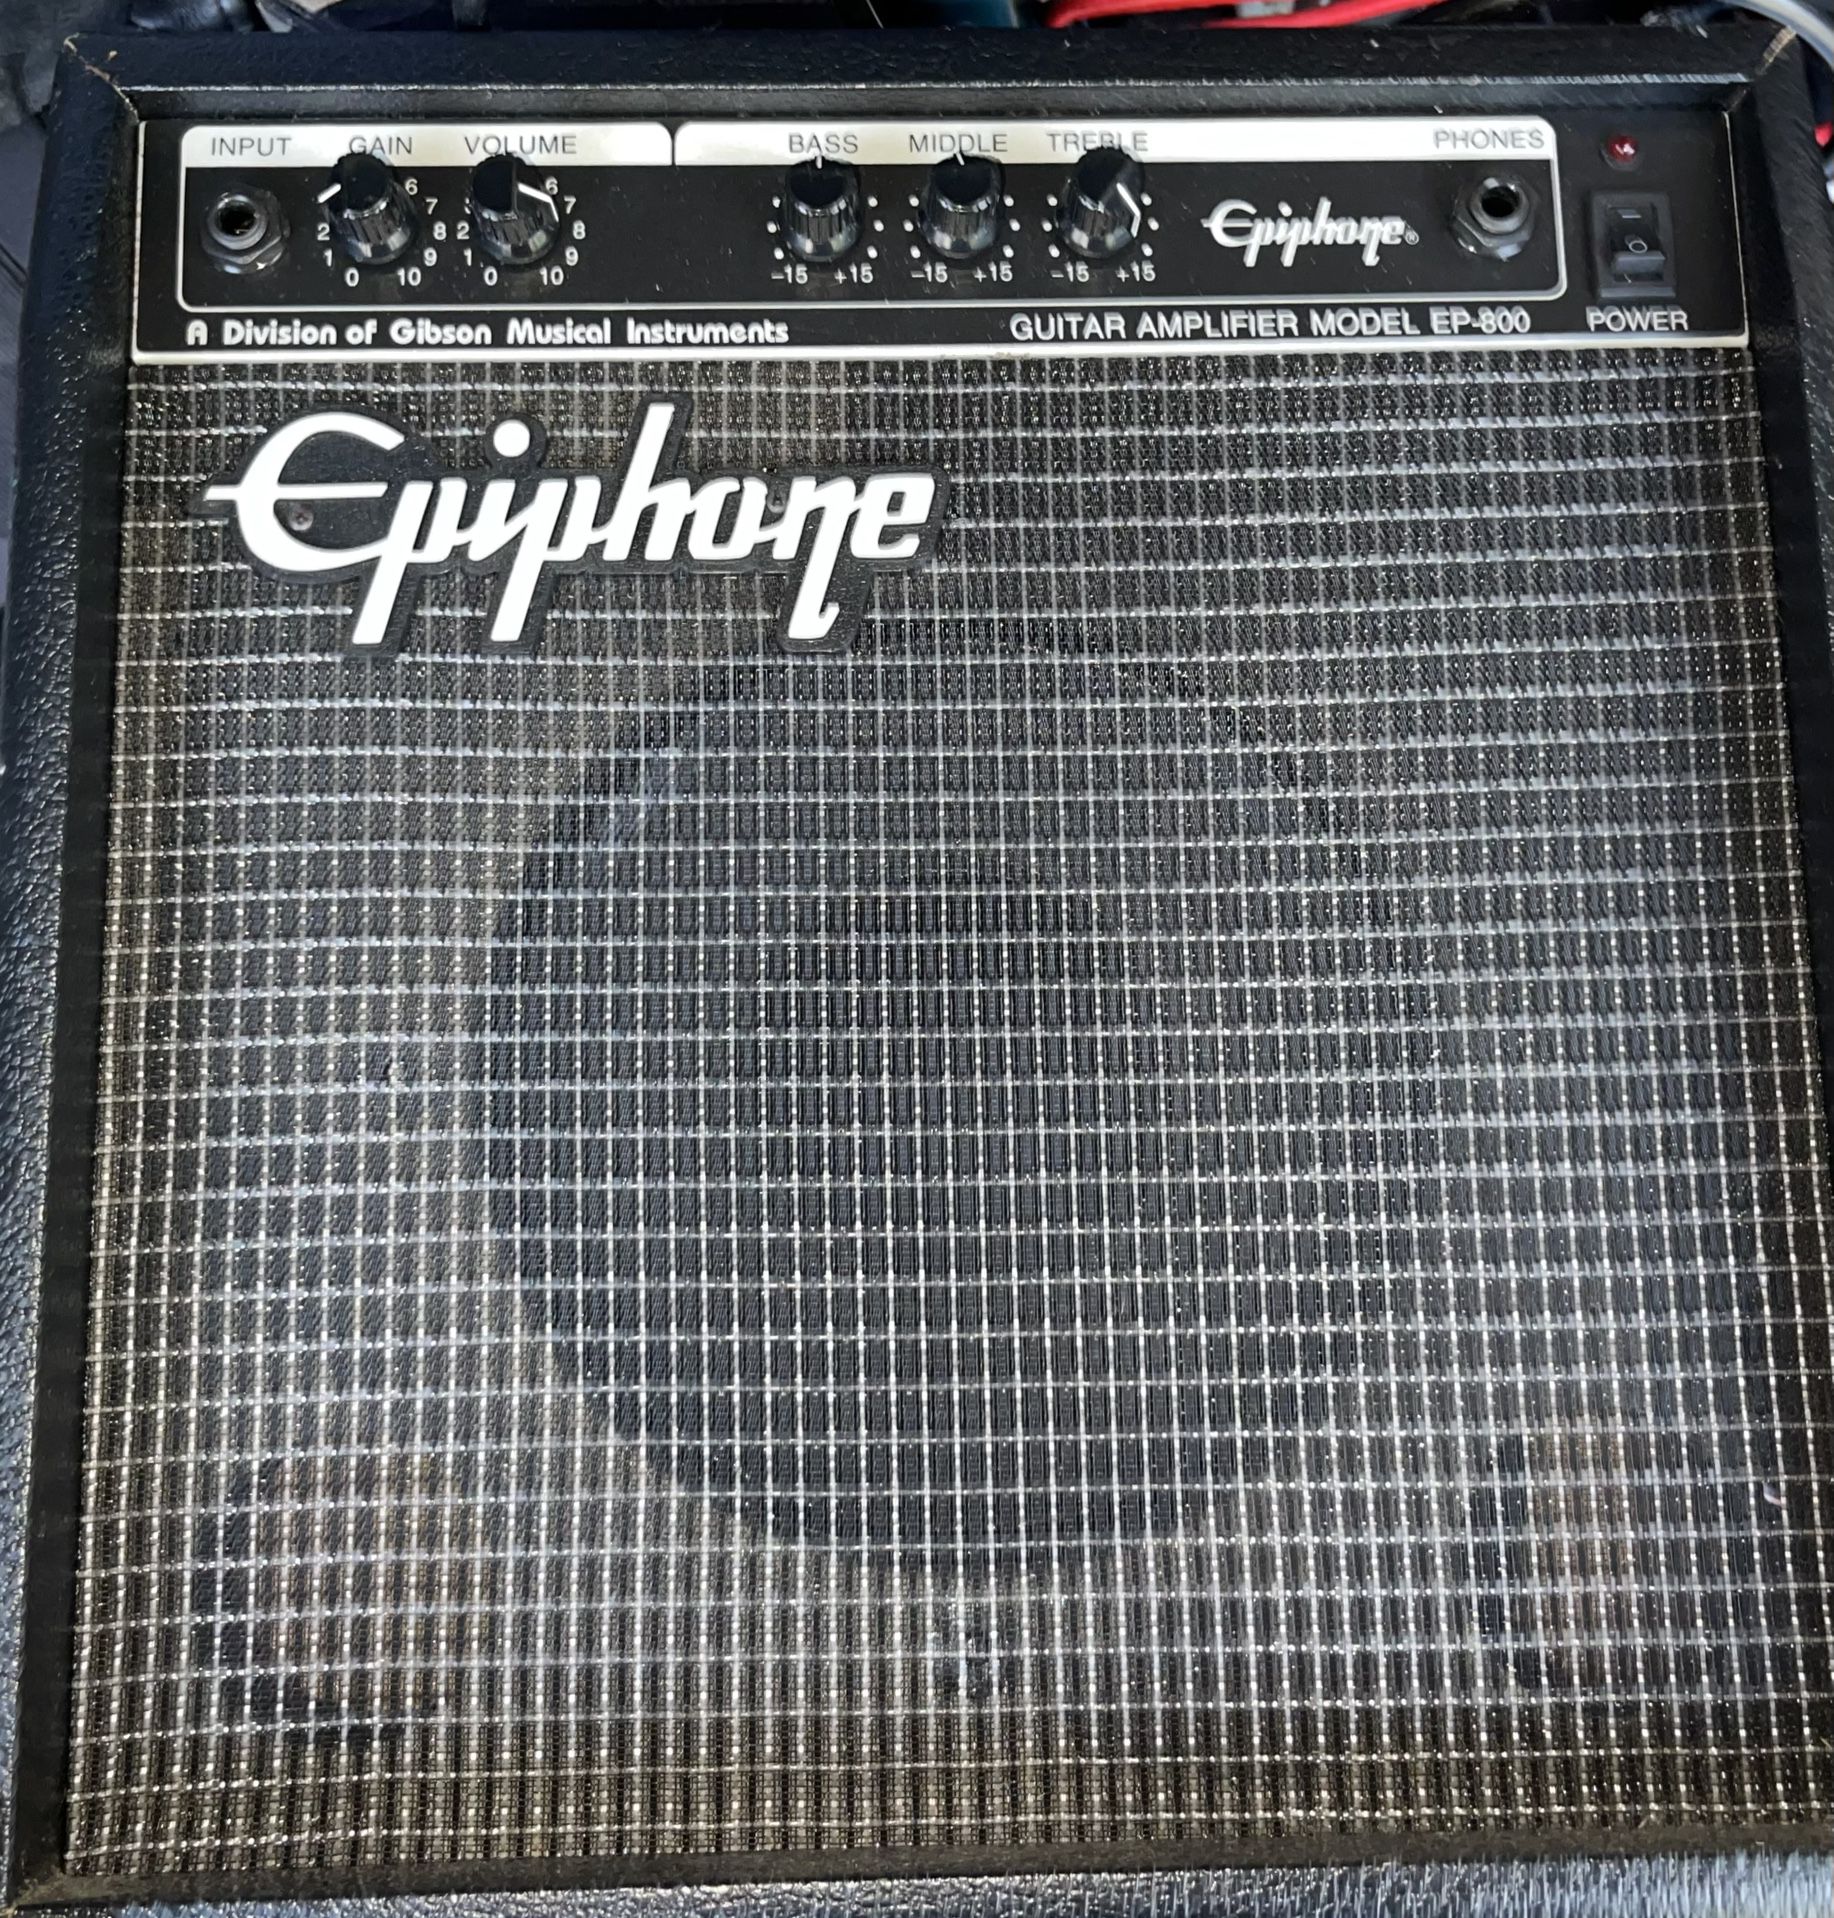 Epiphone Guitar Amplifier By Gibson Guitar Model EP-800 Amp 25 Watt Of Power  